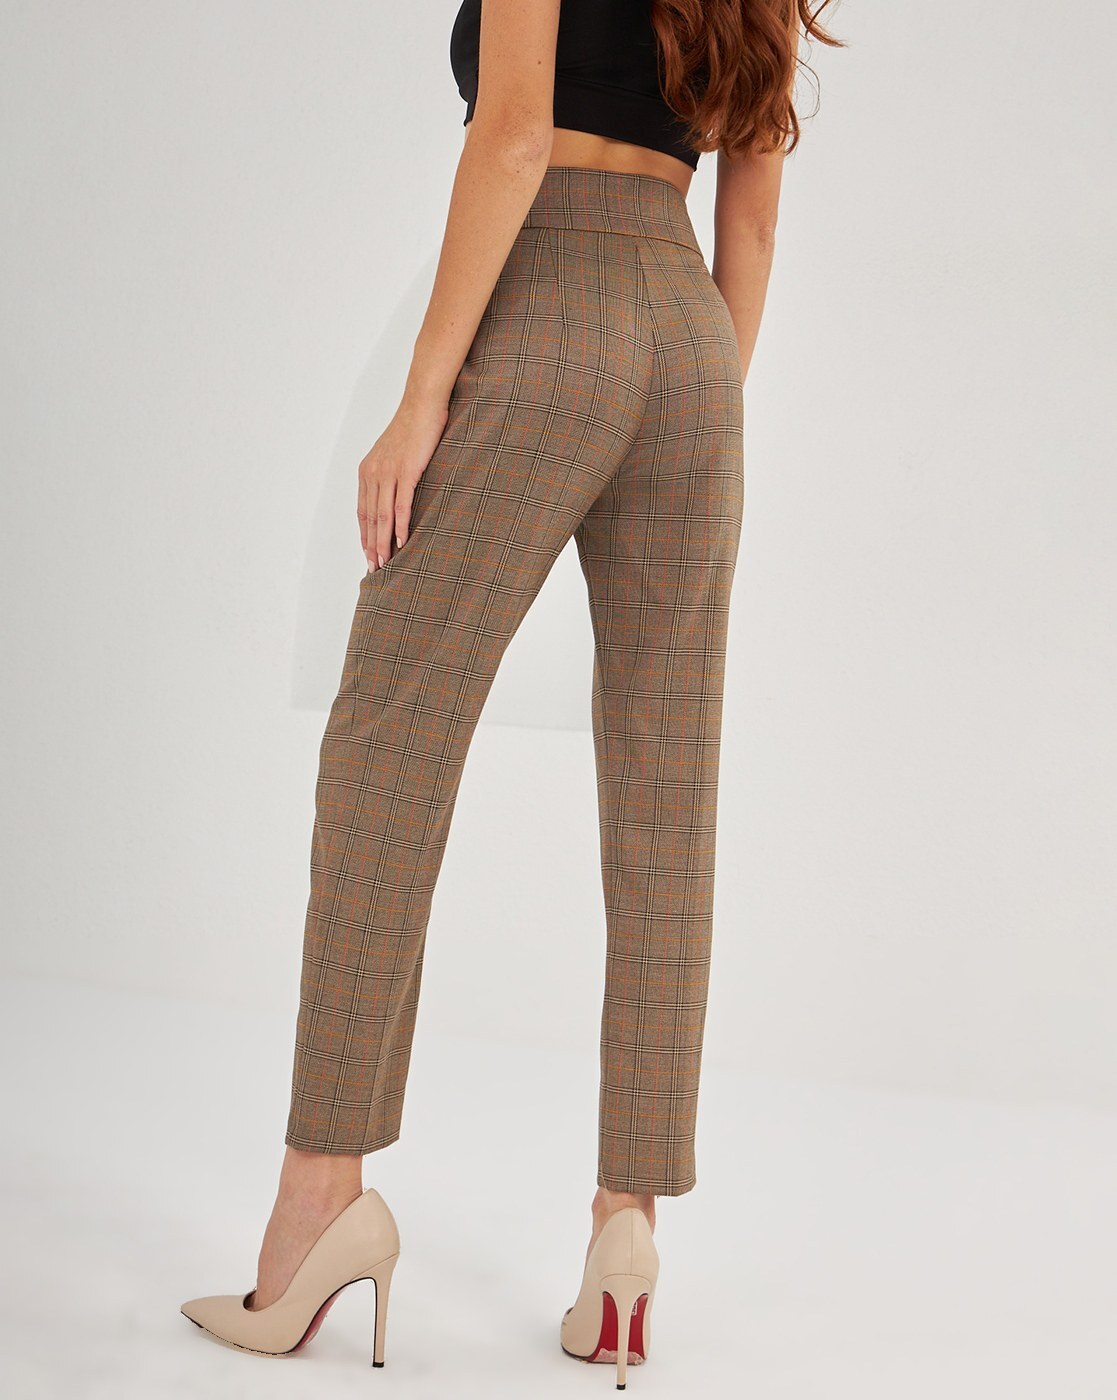 Grey Check Trousers Women | ShopStyle AU